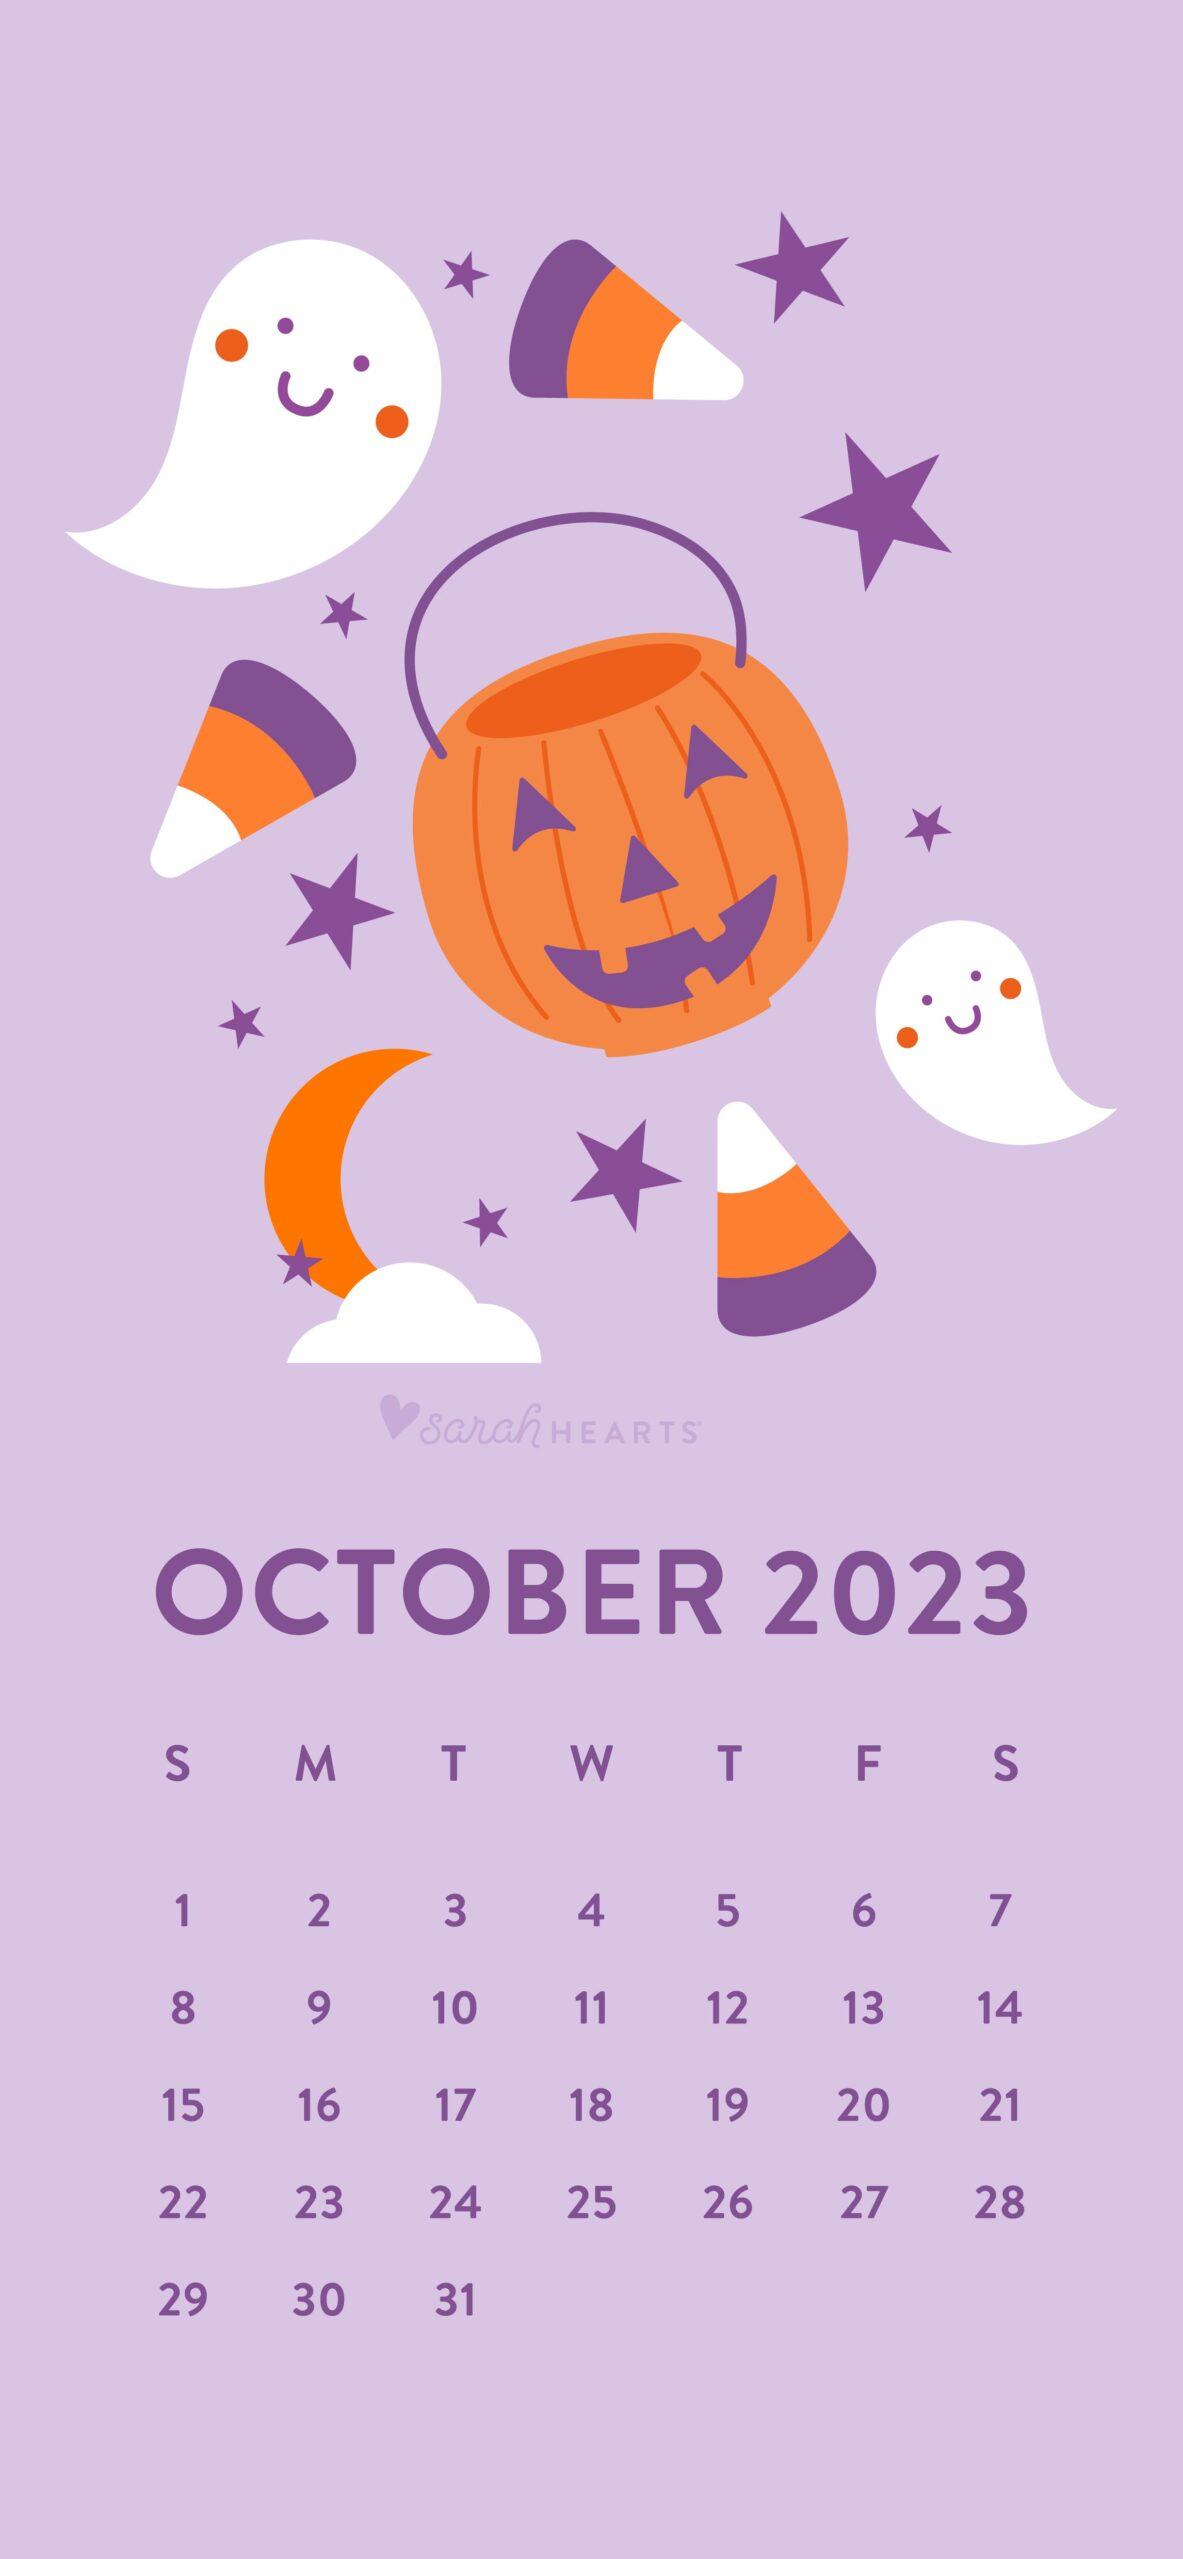 October Halloween Calendar Wallpaper Sarah Hearts